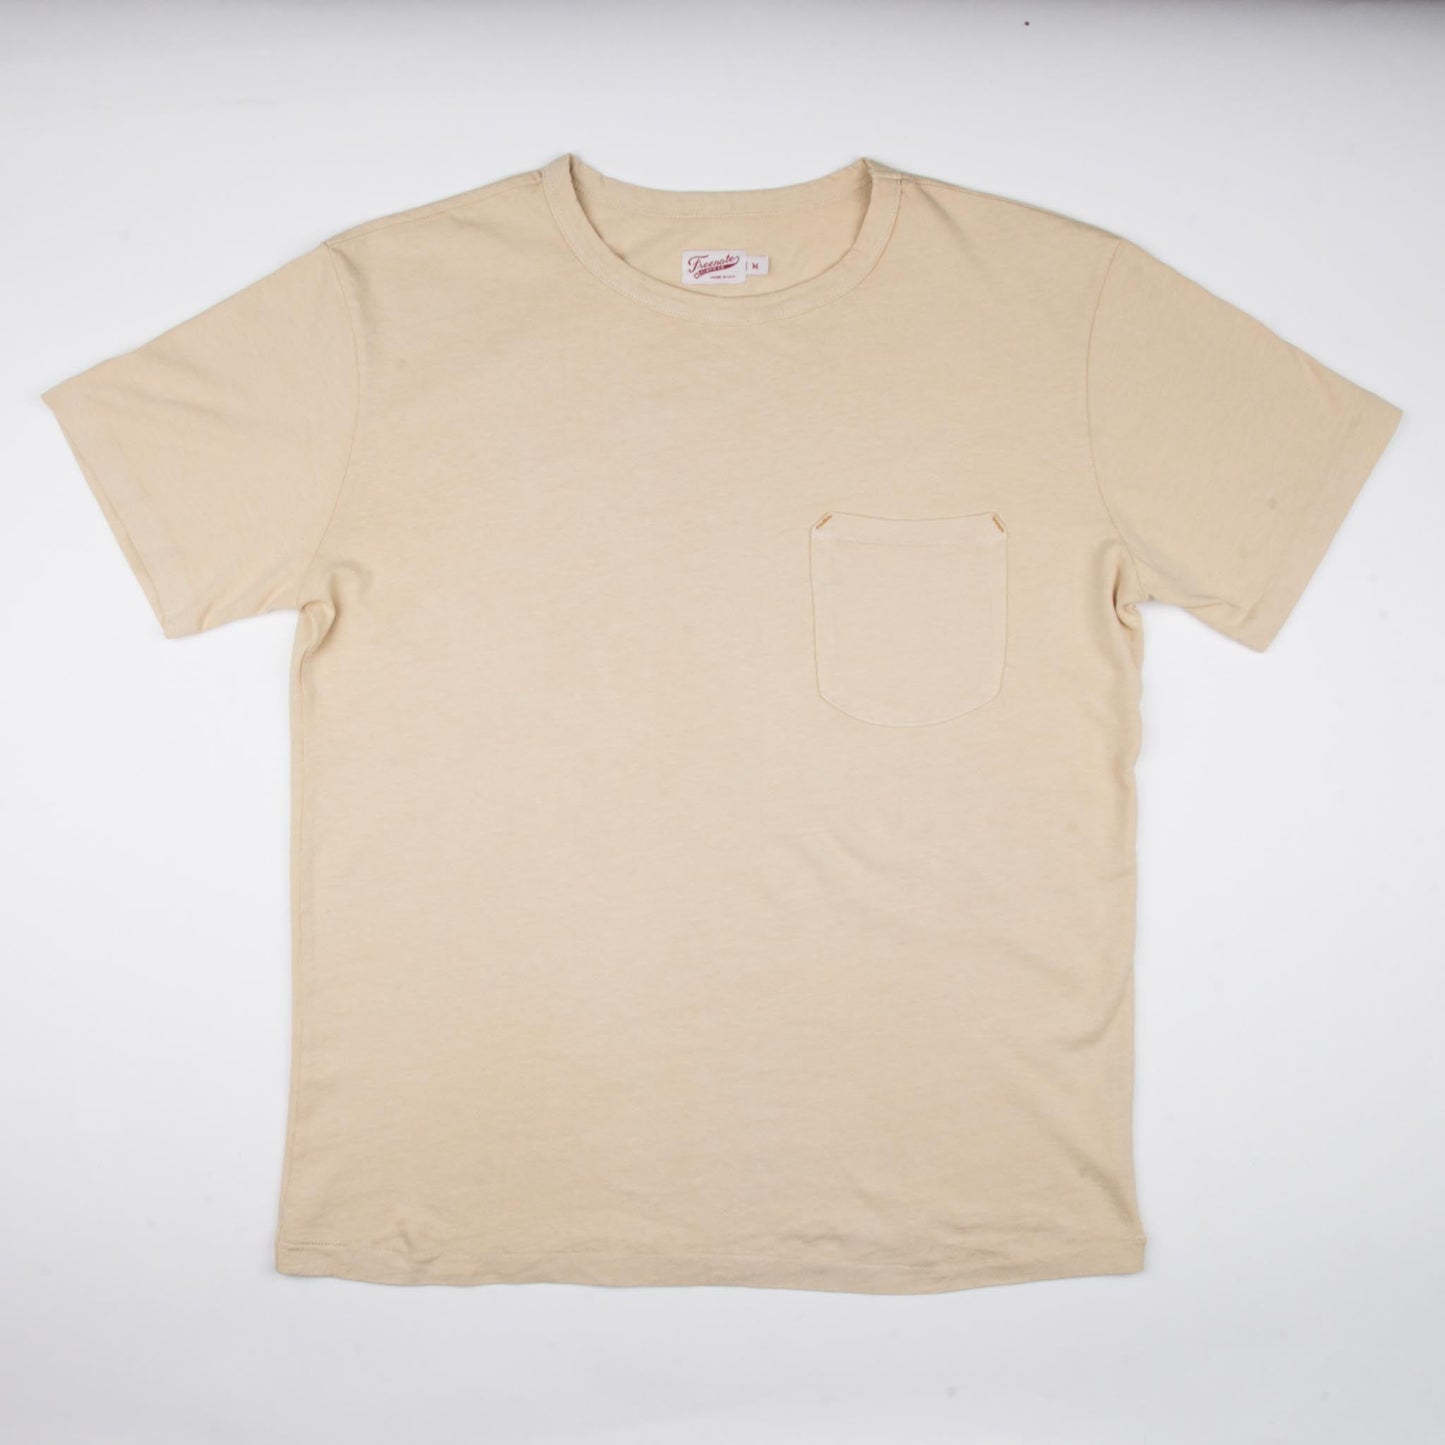 9 Ounce Pocket T-shirt in Cream